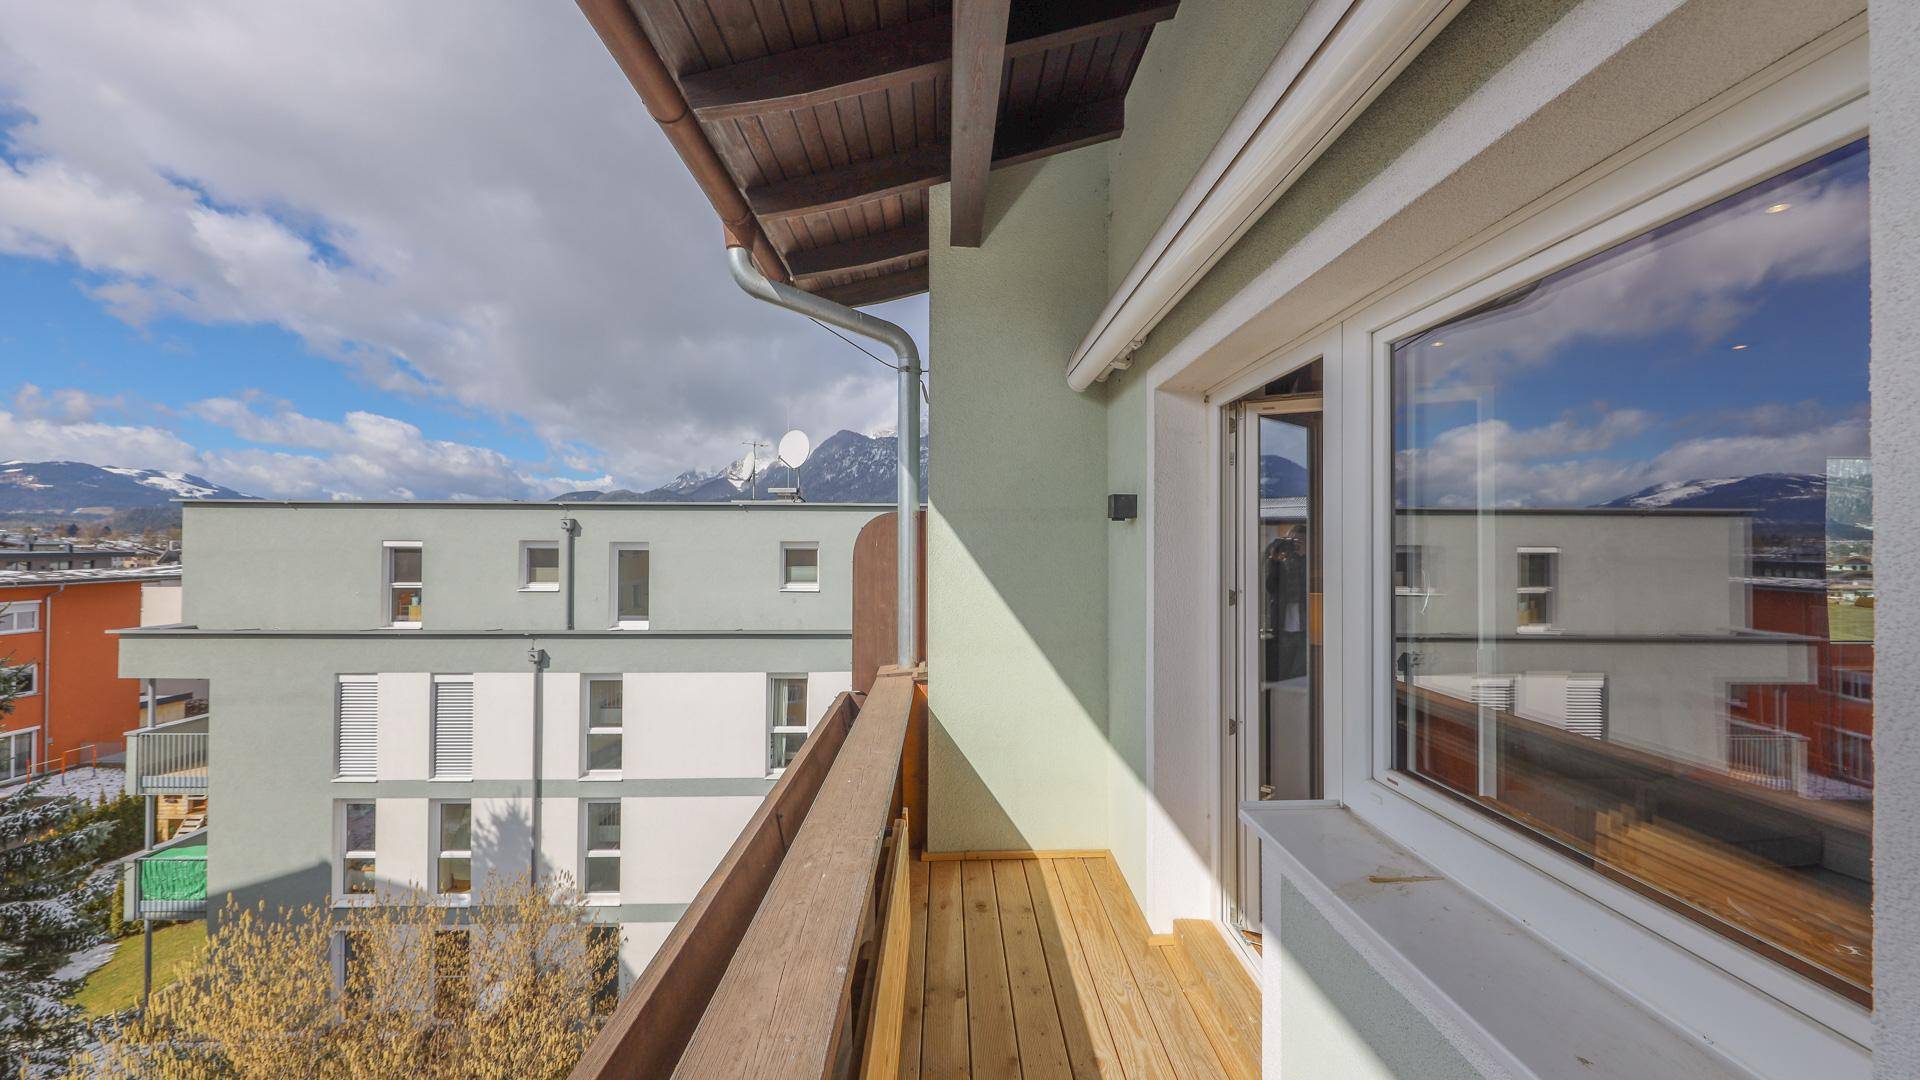 KITZIMMO-Dachgeschosswohnung in St. Johann in Tirol kaufen.